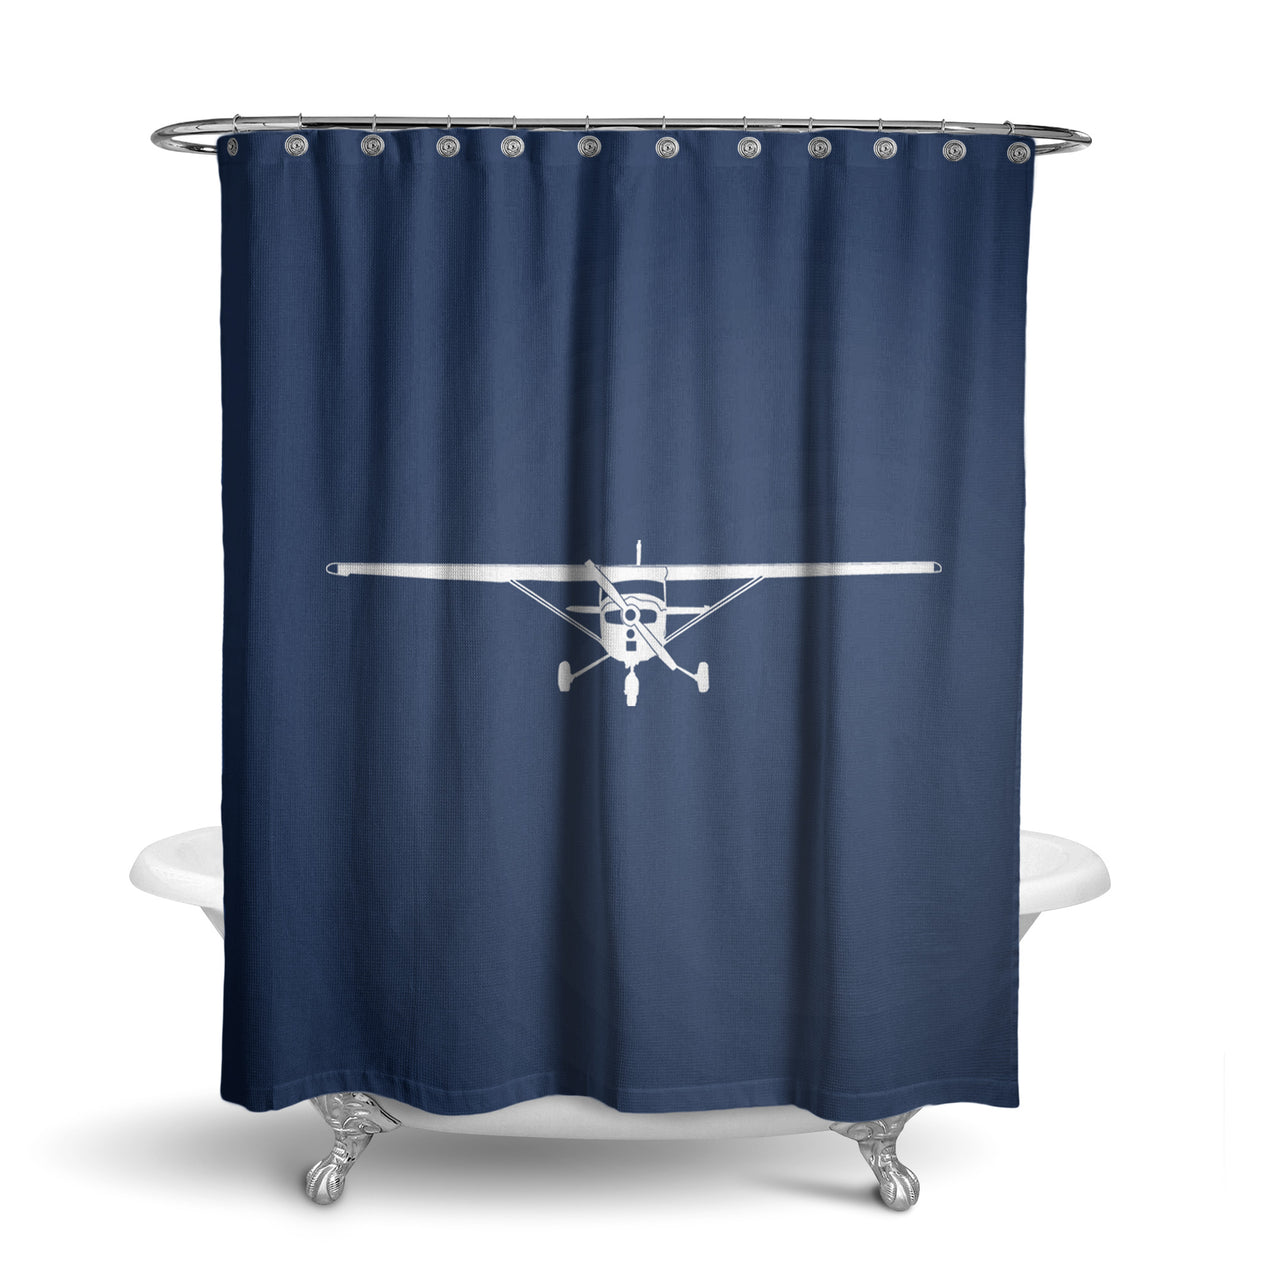 Cessna 172 Silhouette Designed Shower Curtains